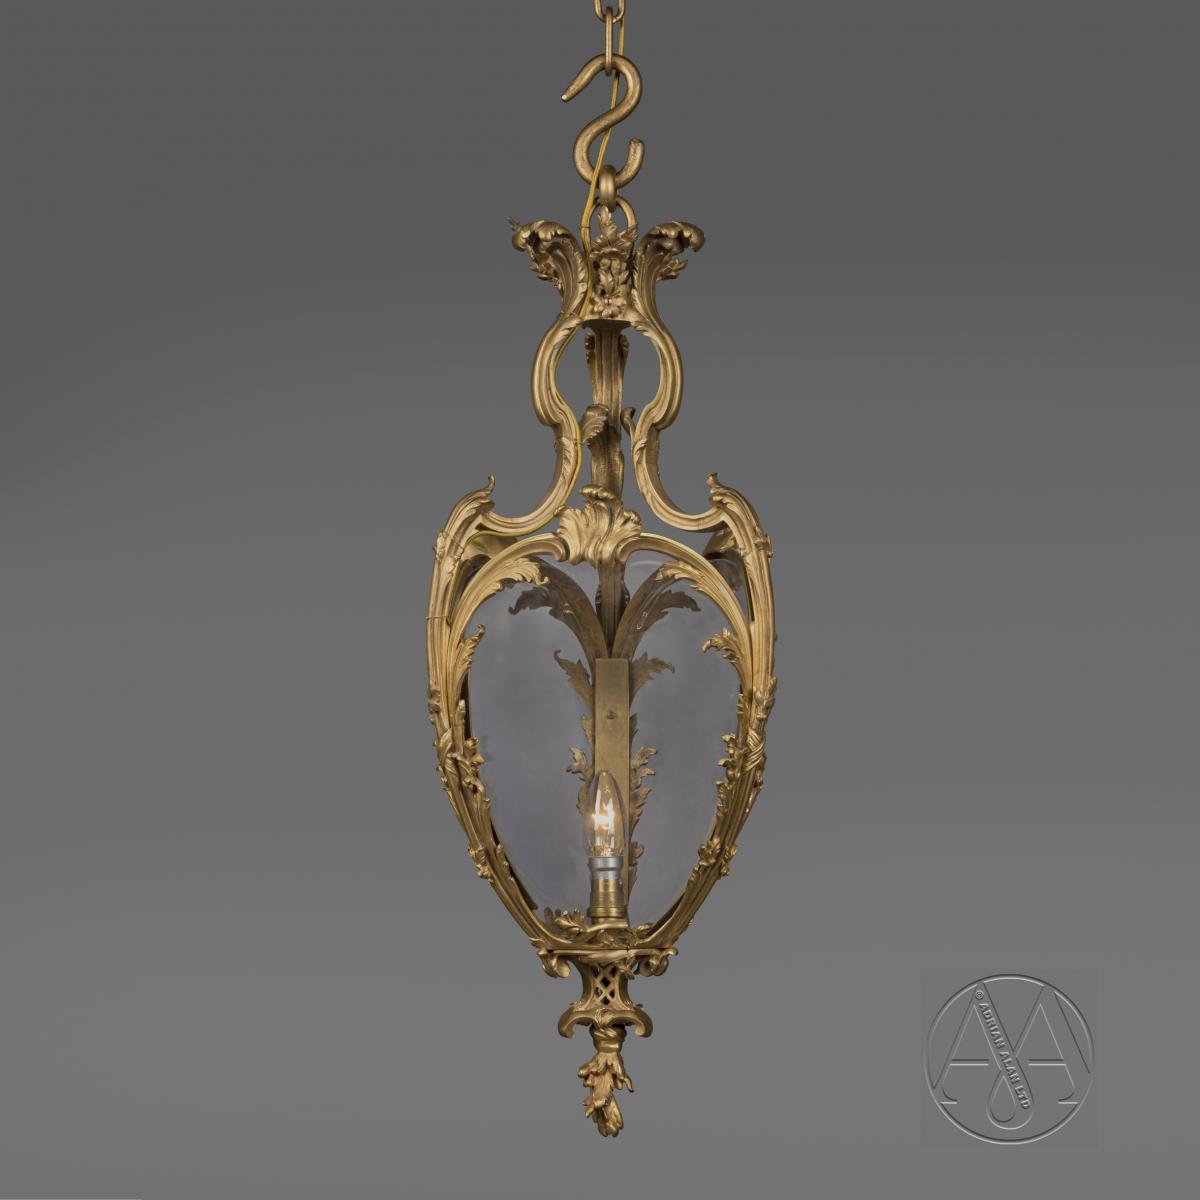 A Fine Louis XV Style Gilt-Bronze Rococo Lantern. French, Circa 1870. 